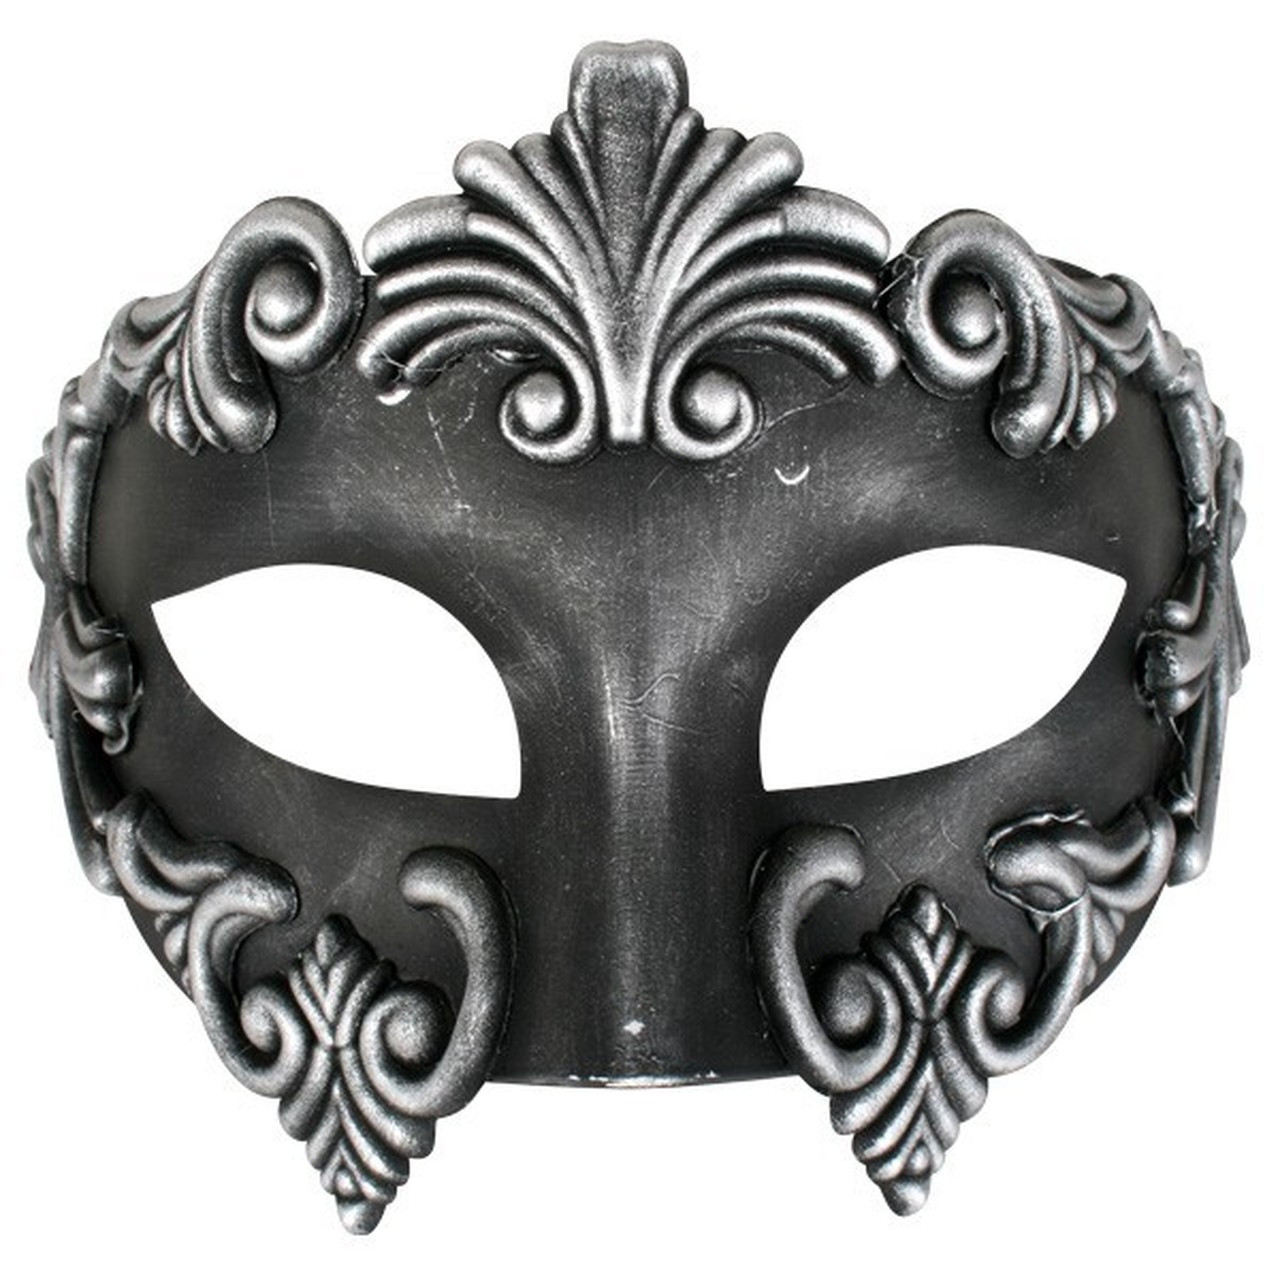 Venetian Masks. Huge amount of Venetian Masks from The Littlest Costume Shop in